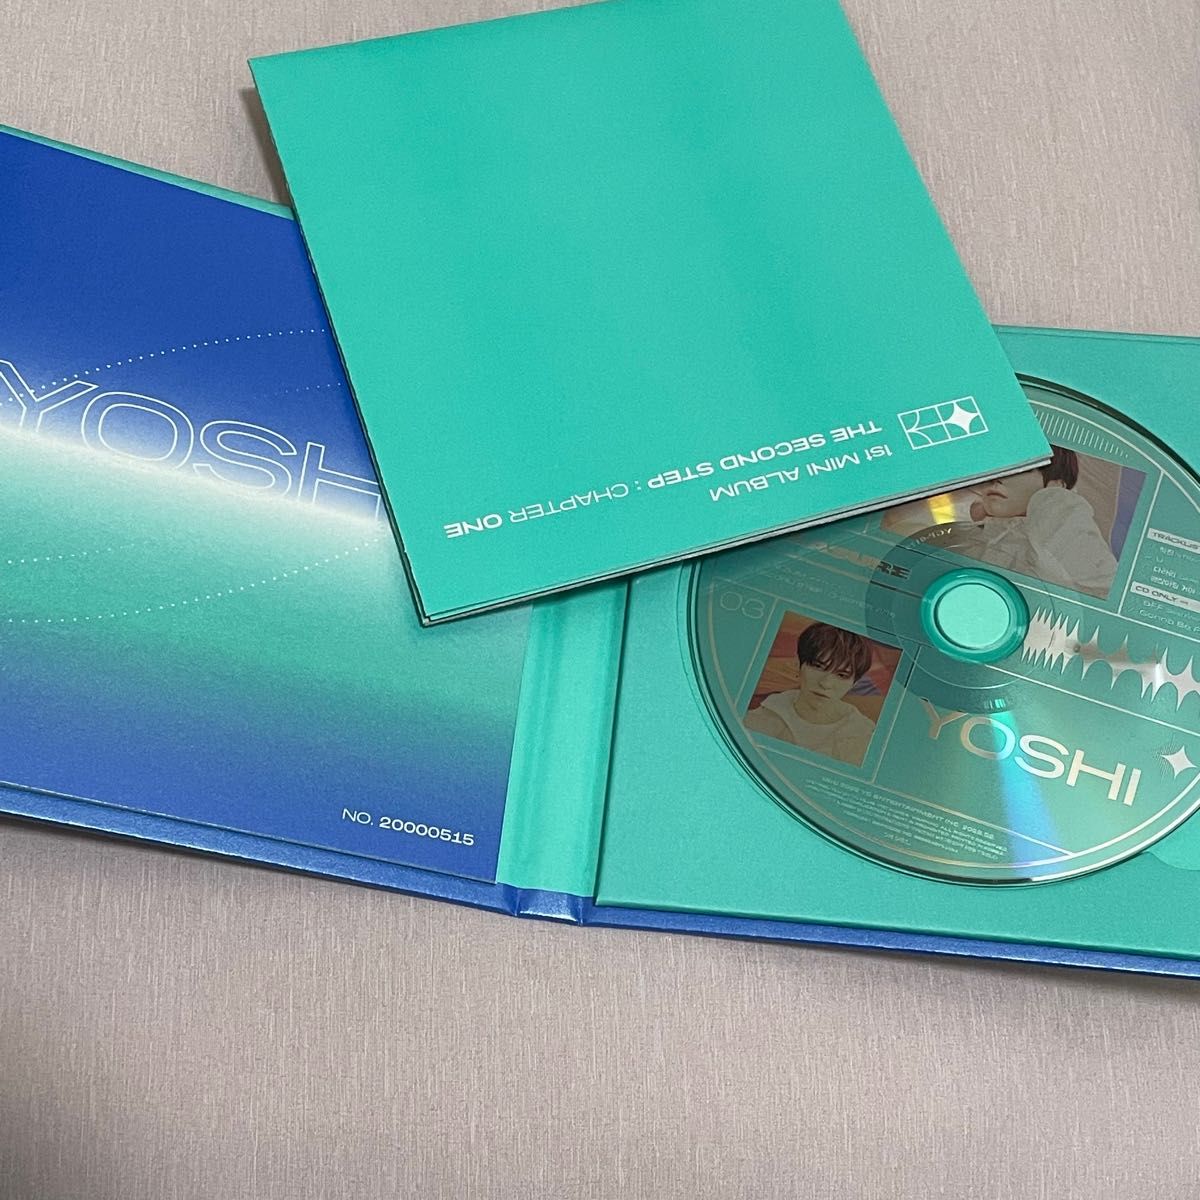 TREASURE『The Second Step : Chapter One: 1st Mini Album』YOSHI Ver.